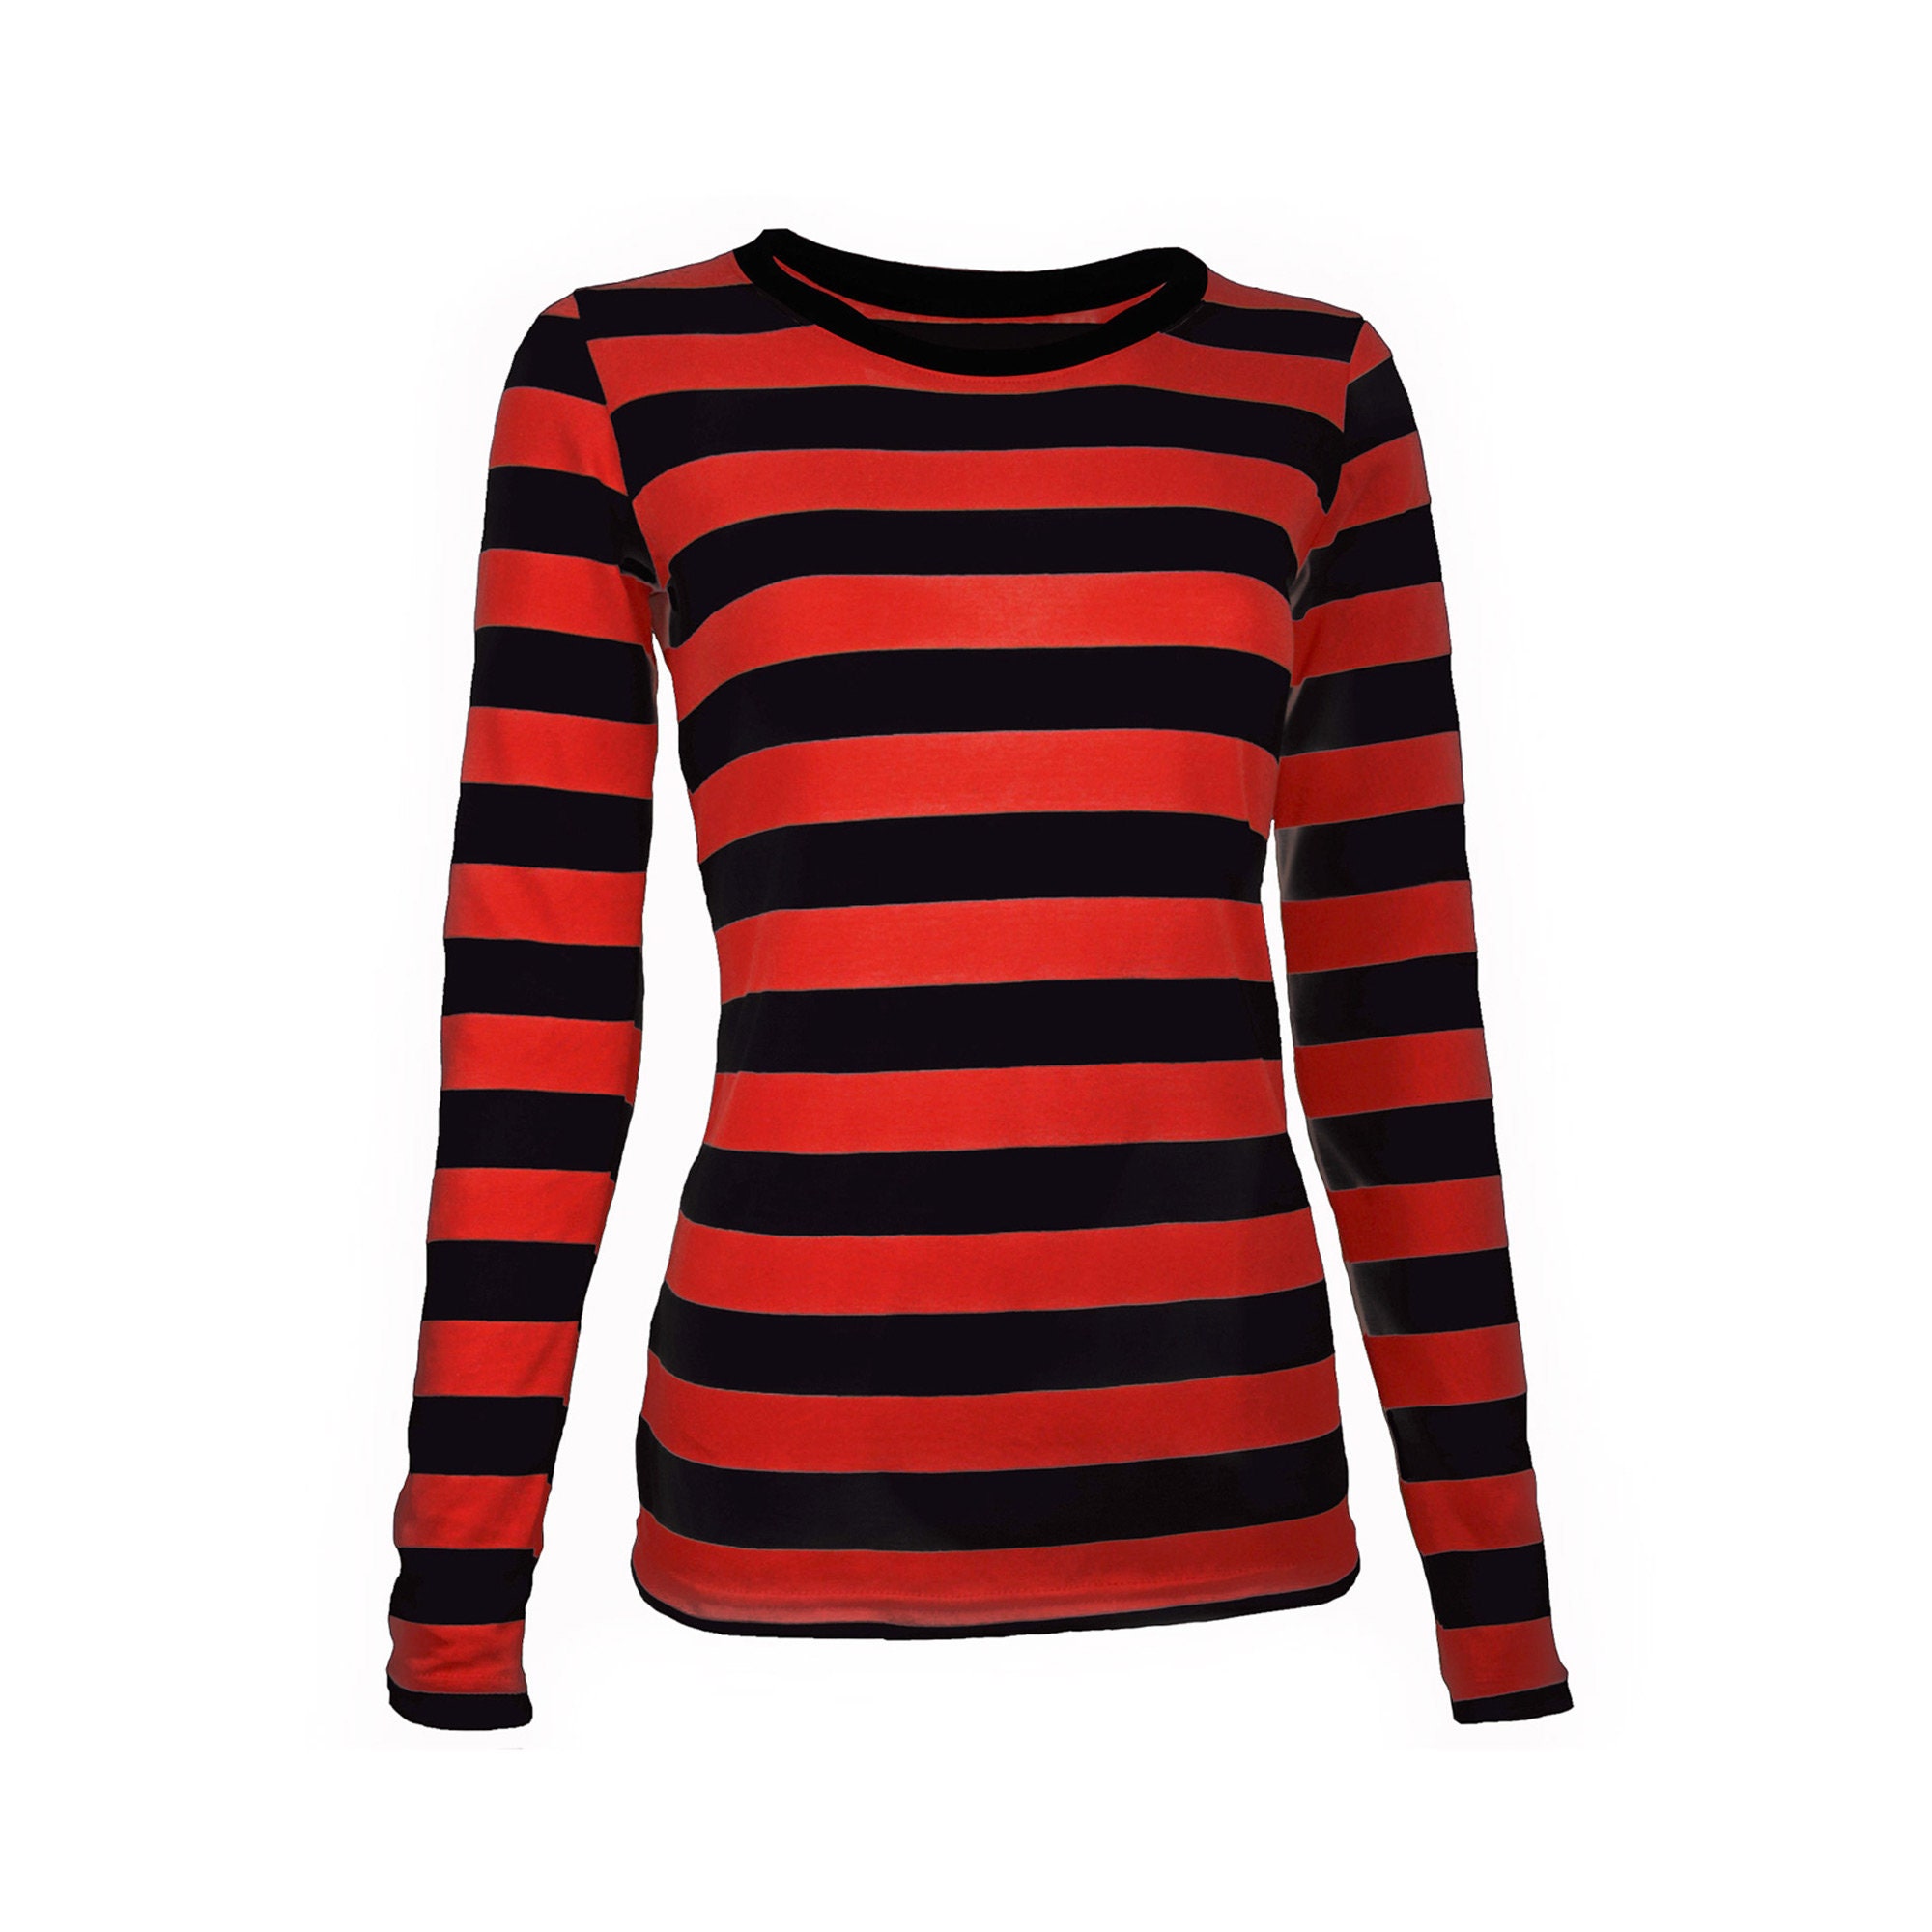 Women's Long Sleeve Black & Striped Shirt - Etsy